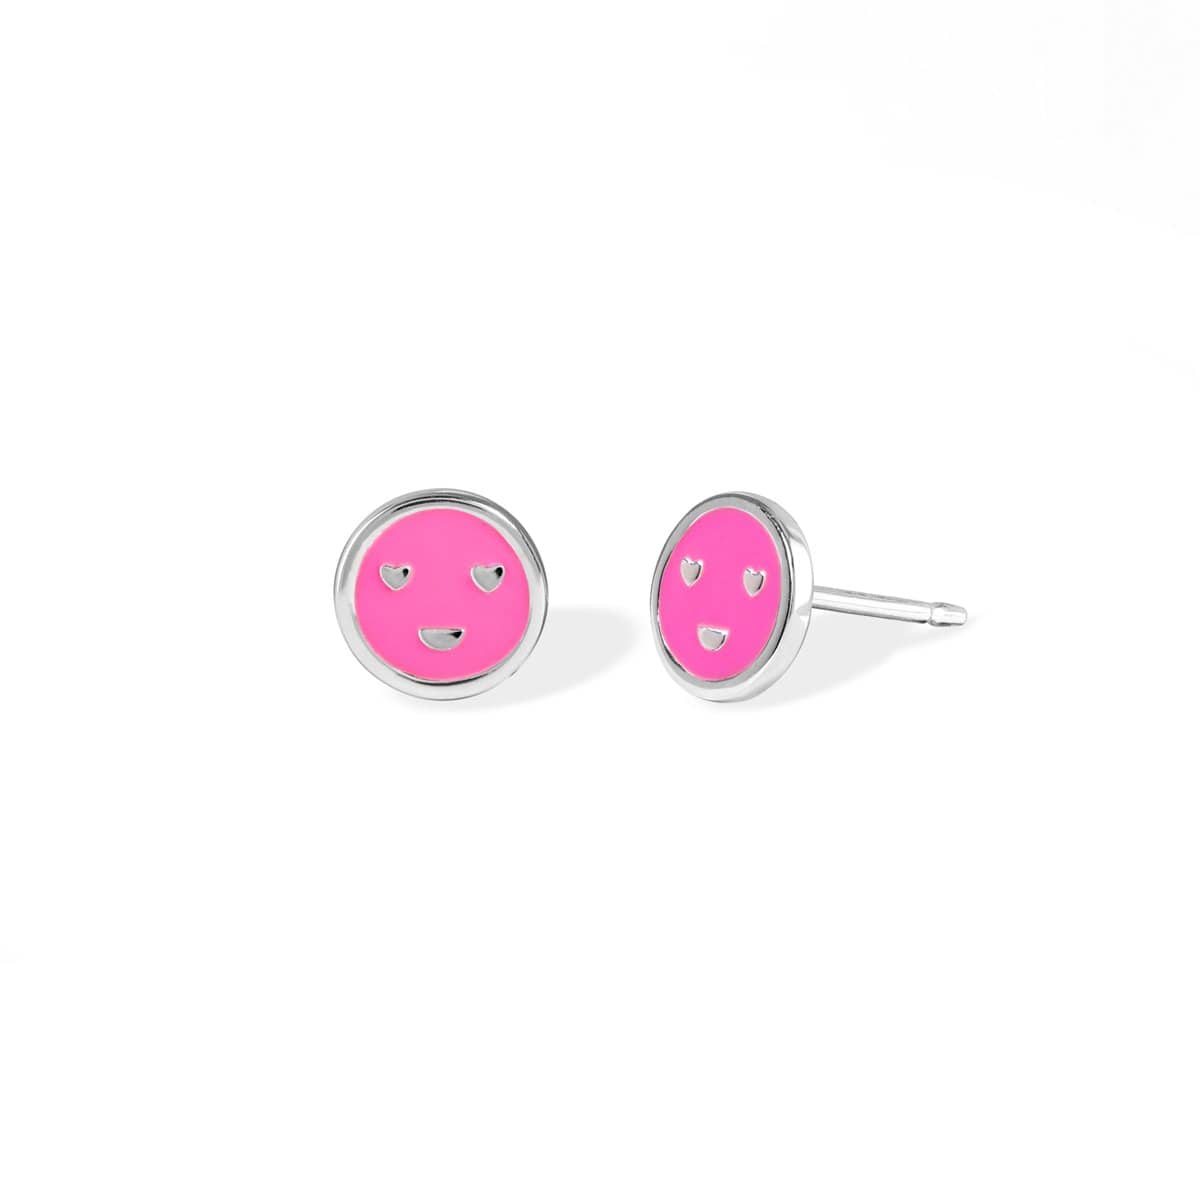 Boma Jewelry Earrings Hot Pink Emoji Face Studs